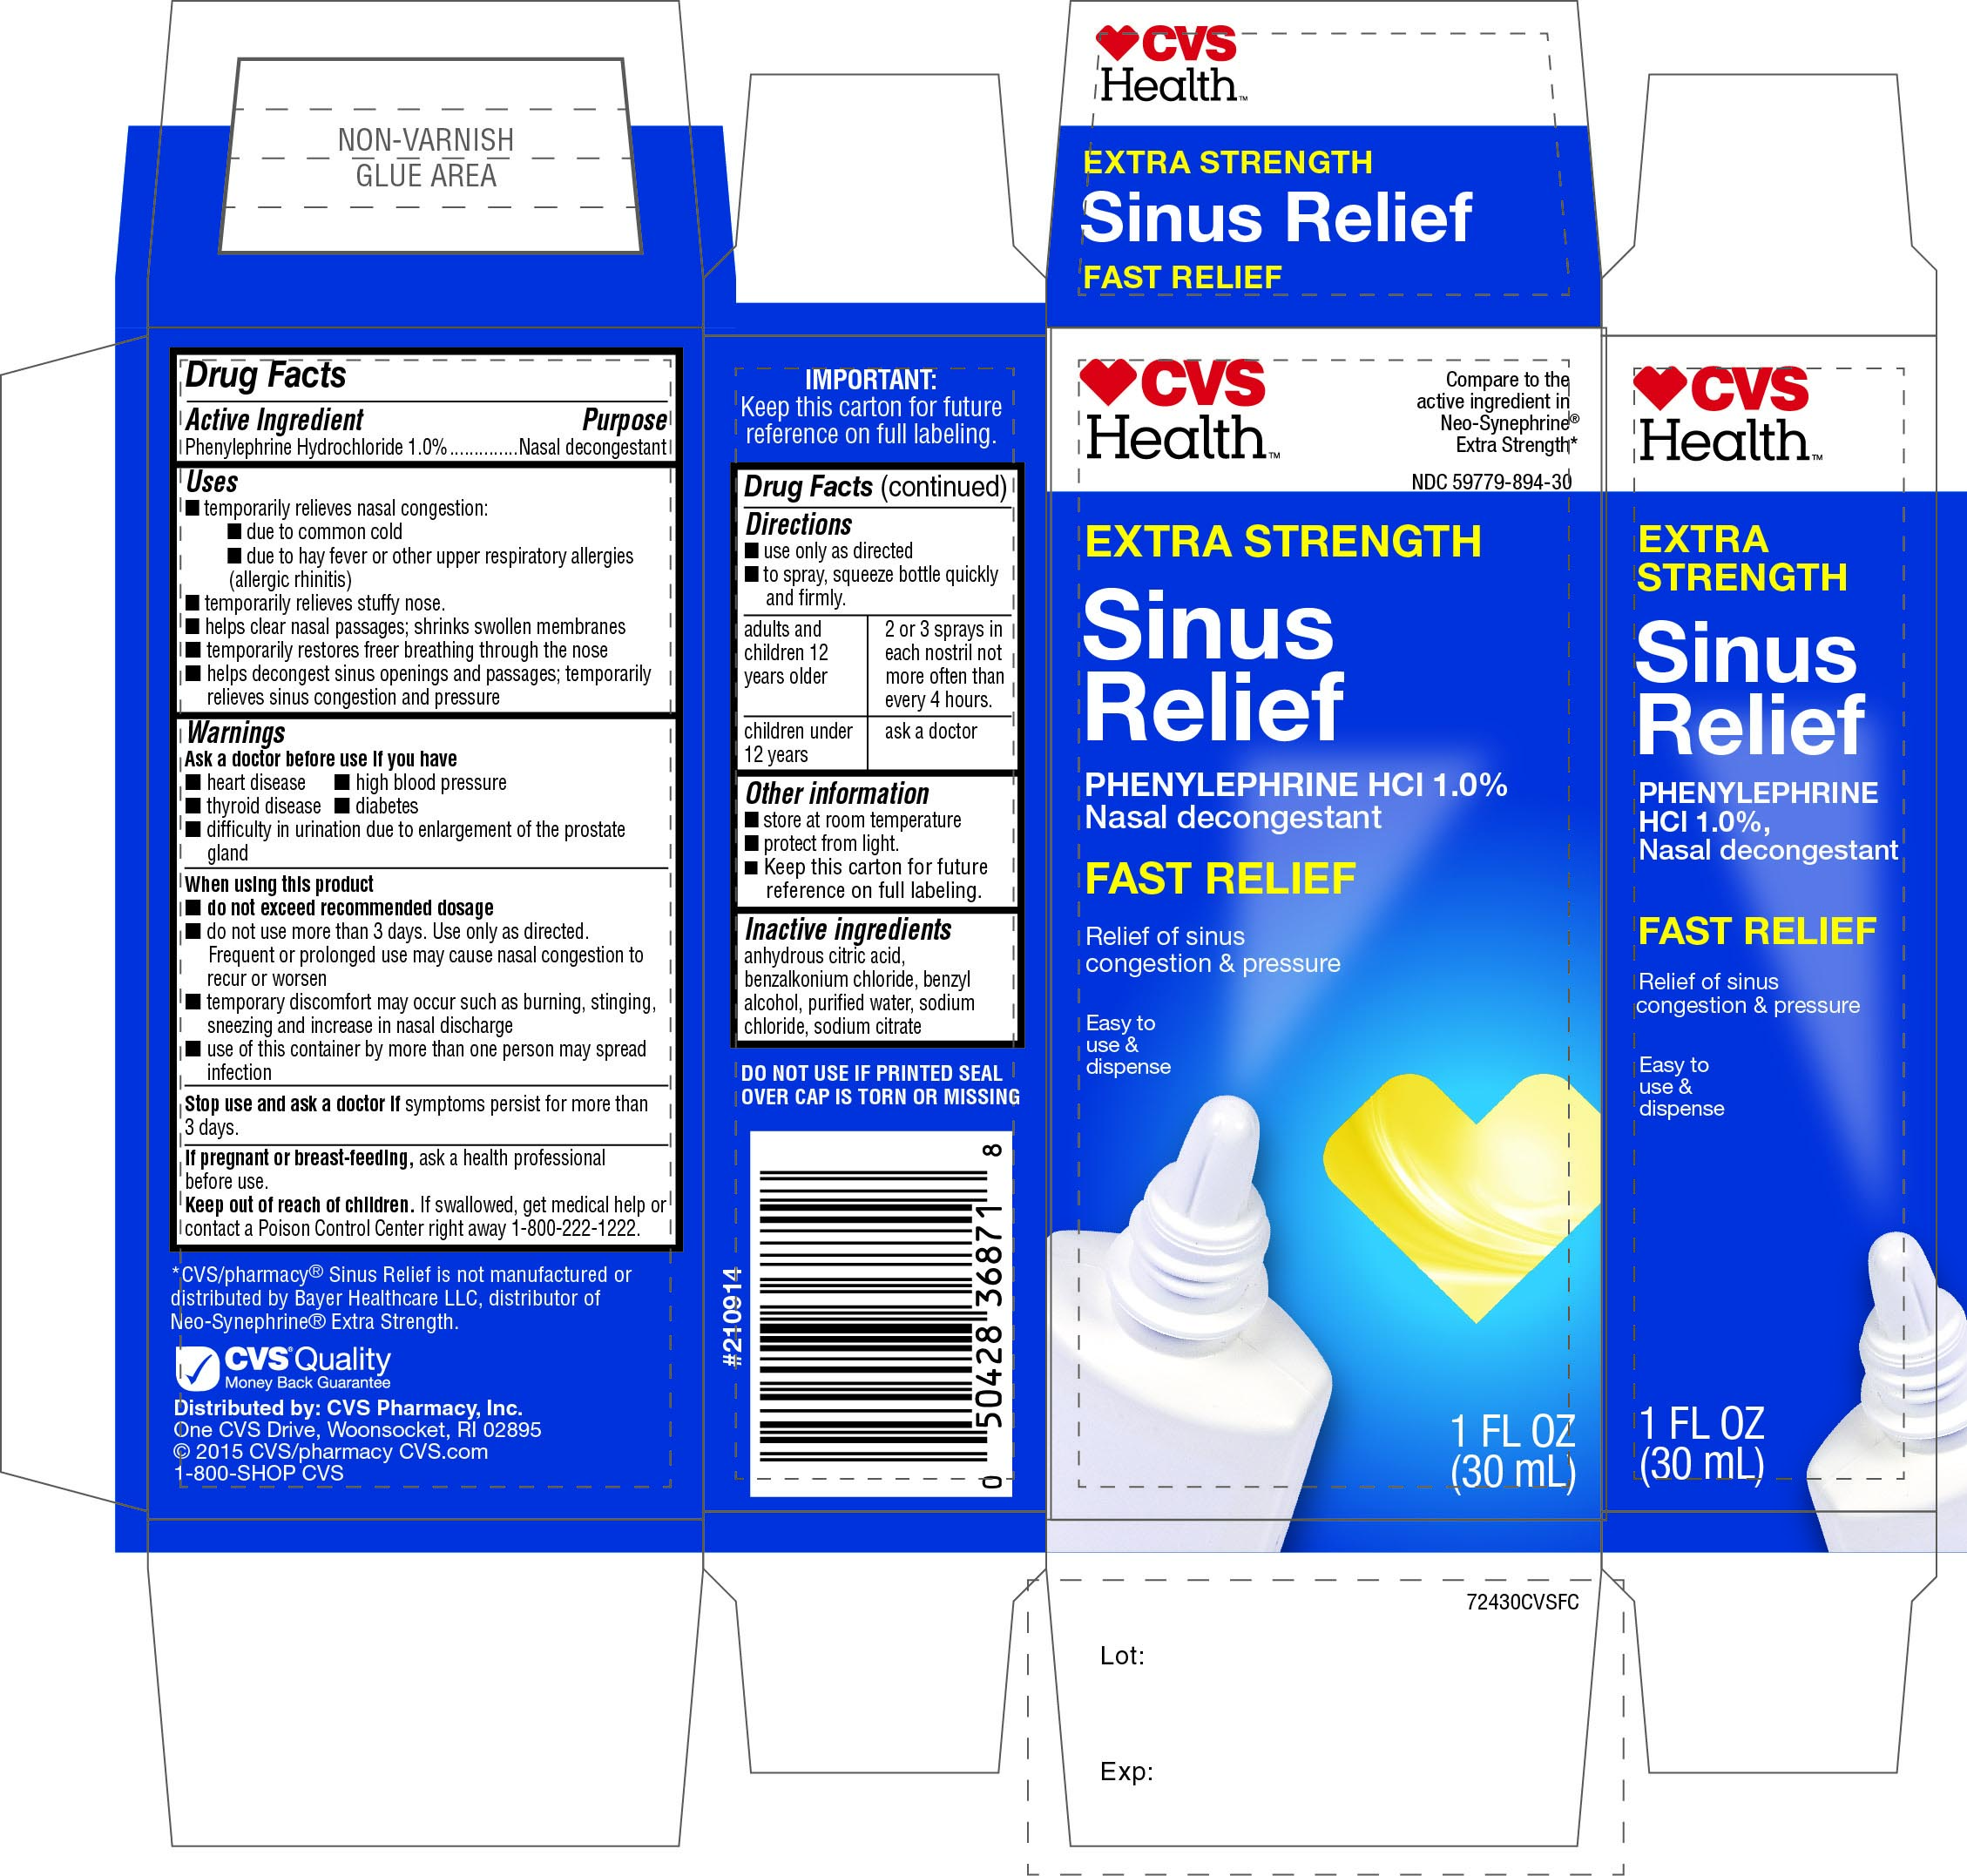 CVS Health Extra Strength Sinus Relief  Phenylephrine HCl 1.0% 1 FL OZ